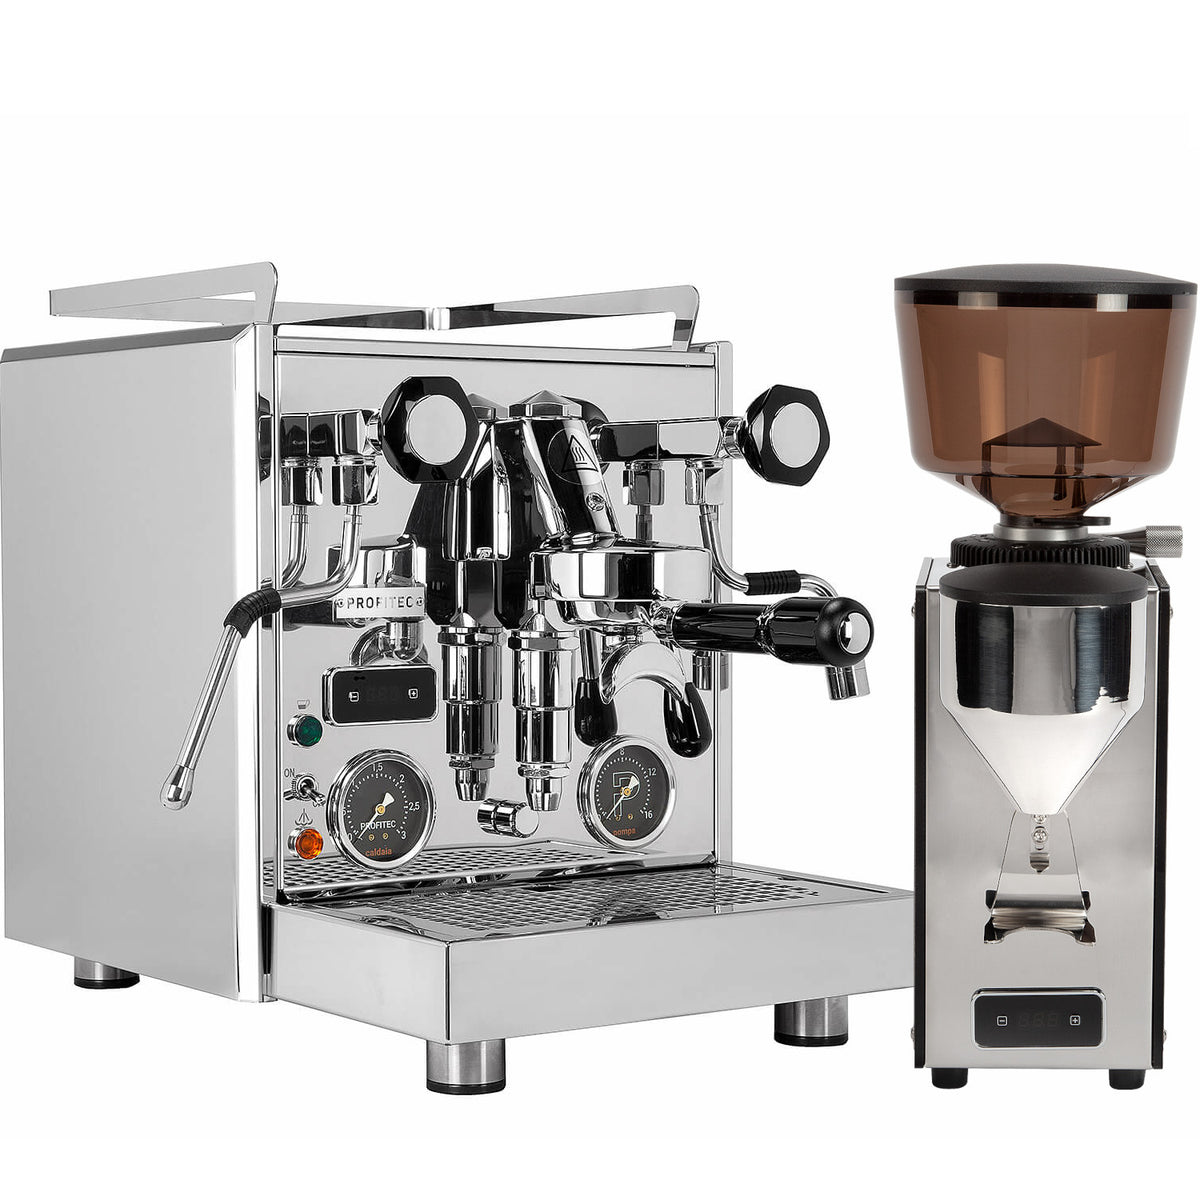 Profitec pro 700 and t64 espresso griner deal